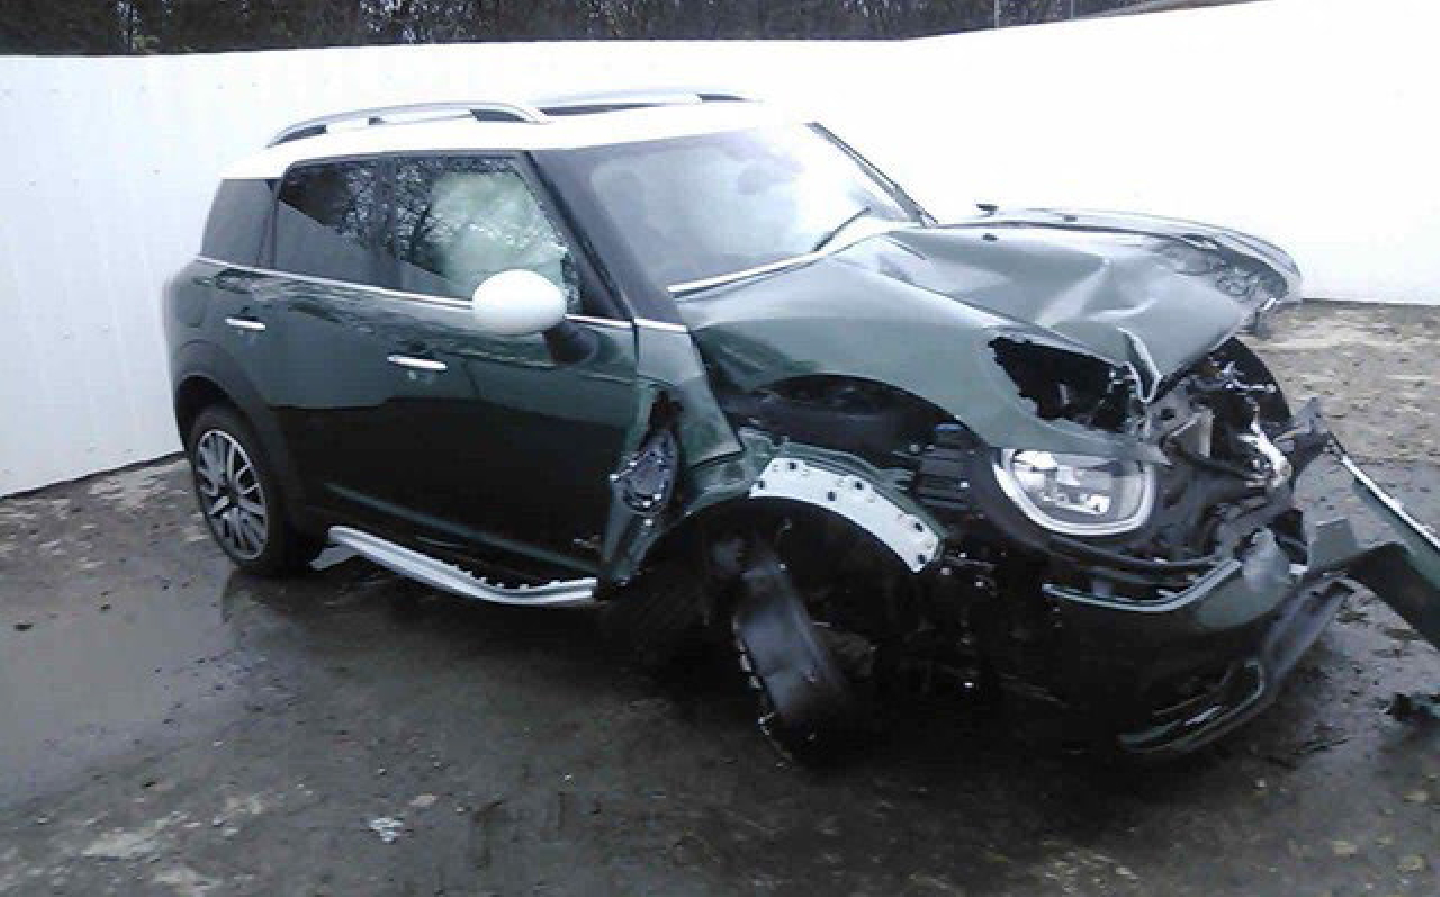 Salvage Damaged Cars UK